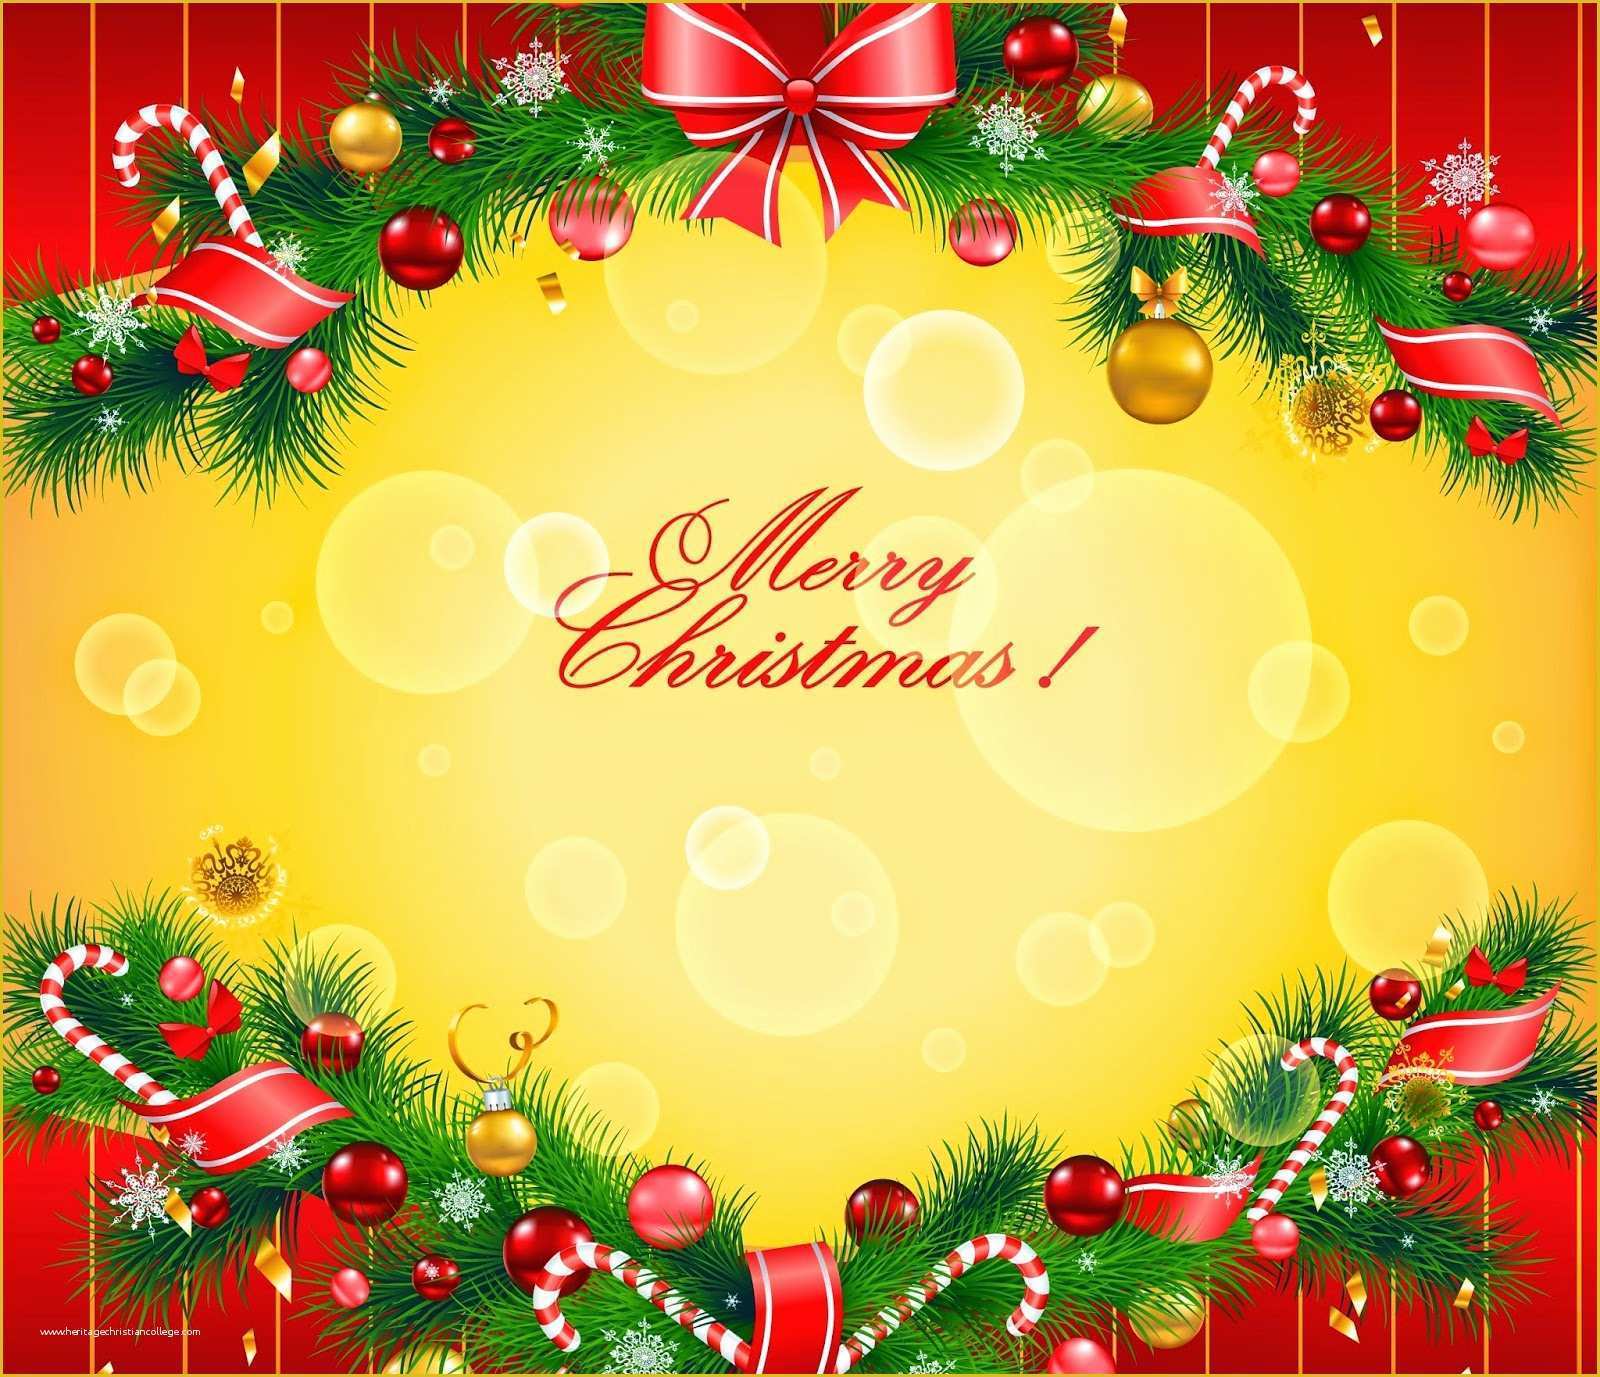 61 Free Christmas Greeting Card Templates